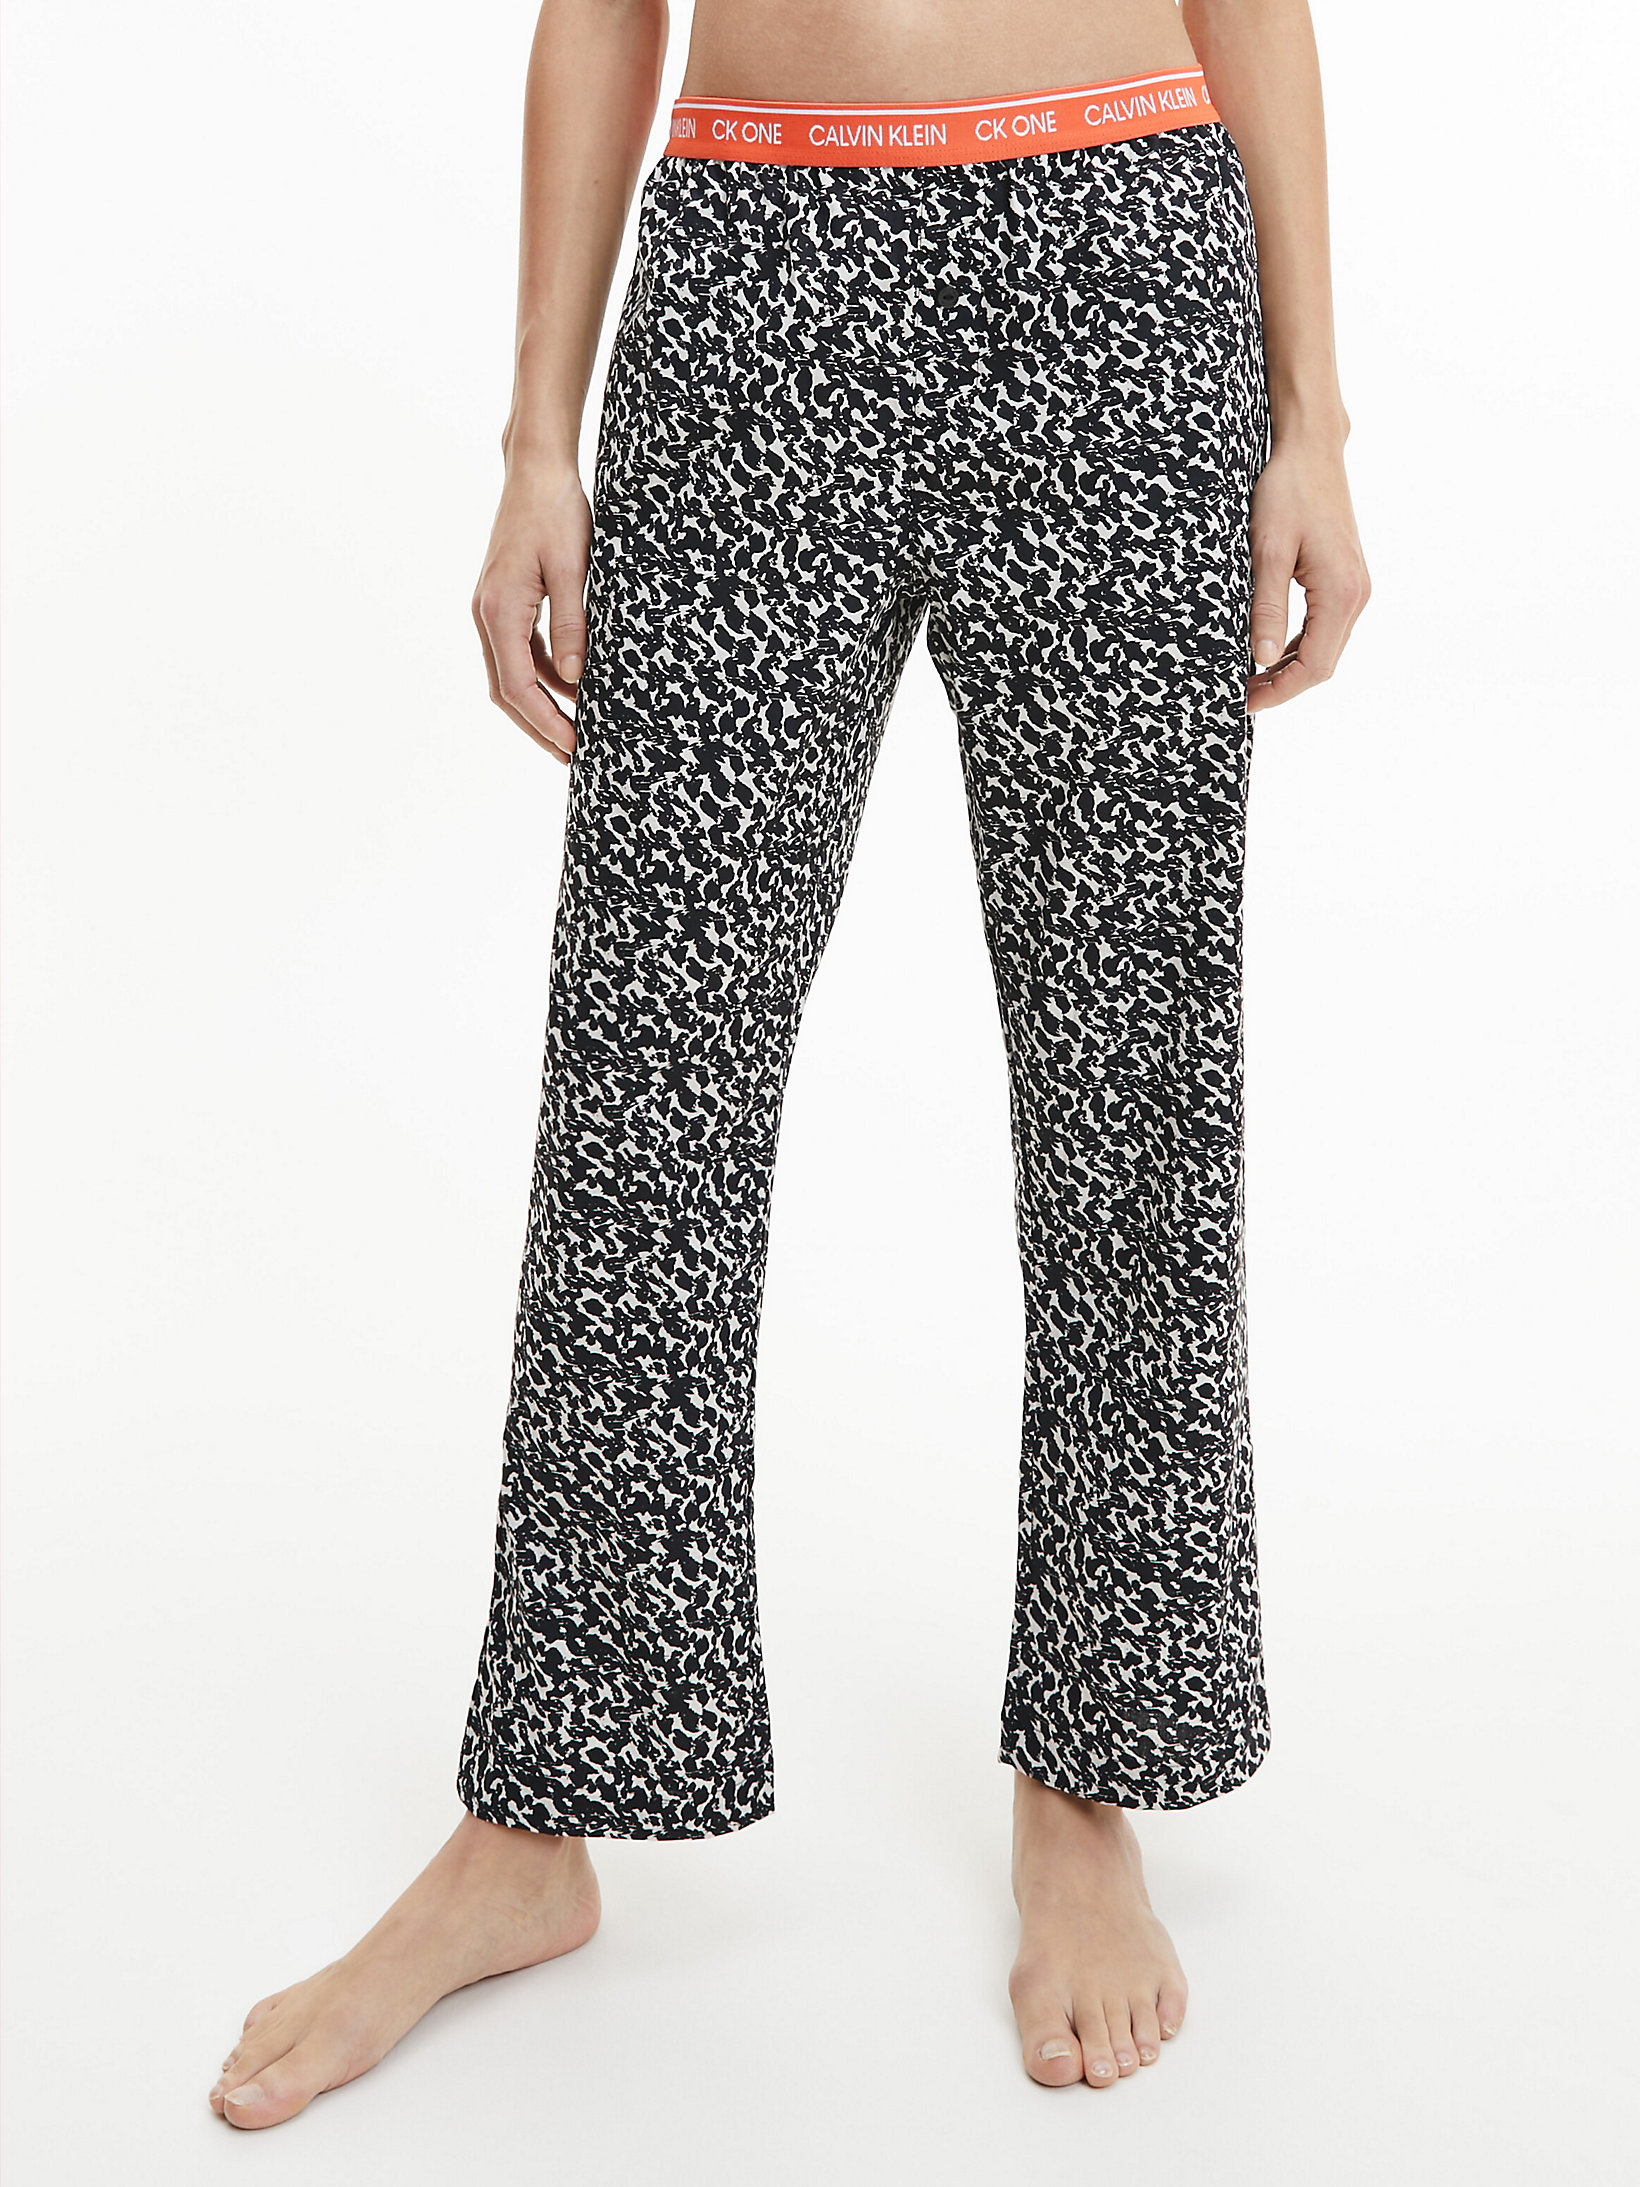 Pantalon De Pyjama - CK One > Distorted Animal - Oatmeal Heather > undefined femmes > Calvin Klein